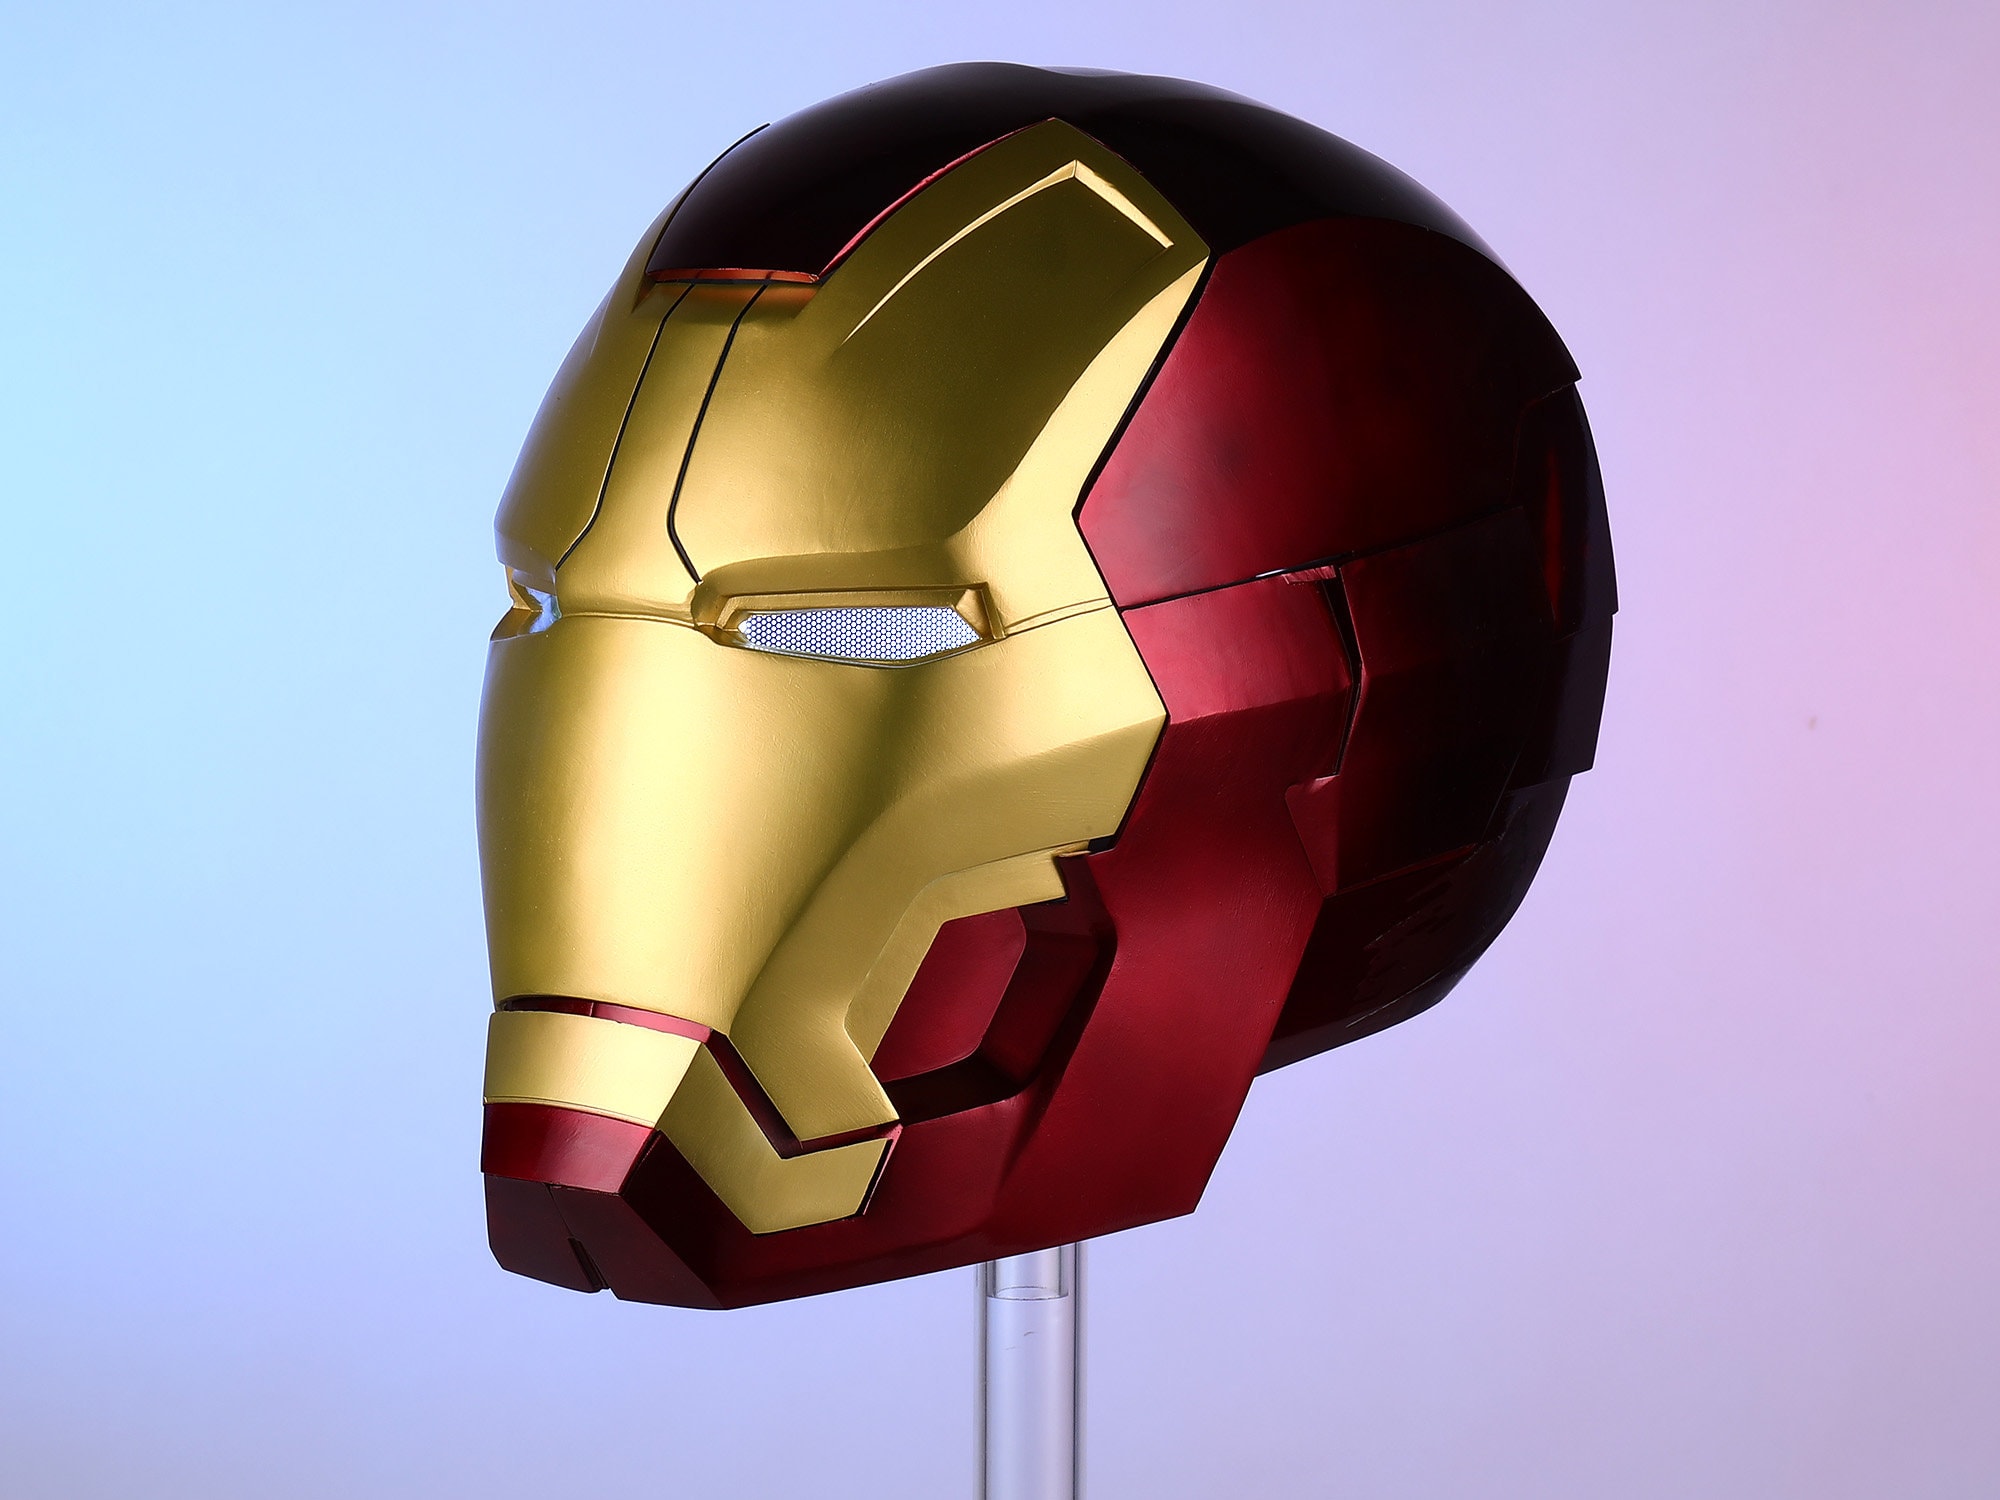 Marvel 1:1 Iron Man MK42 Metal Helmet 3D Printed Replica Cosplay Prop Model Toy 